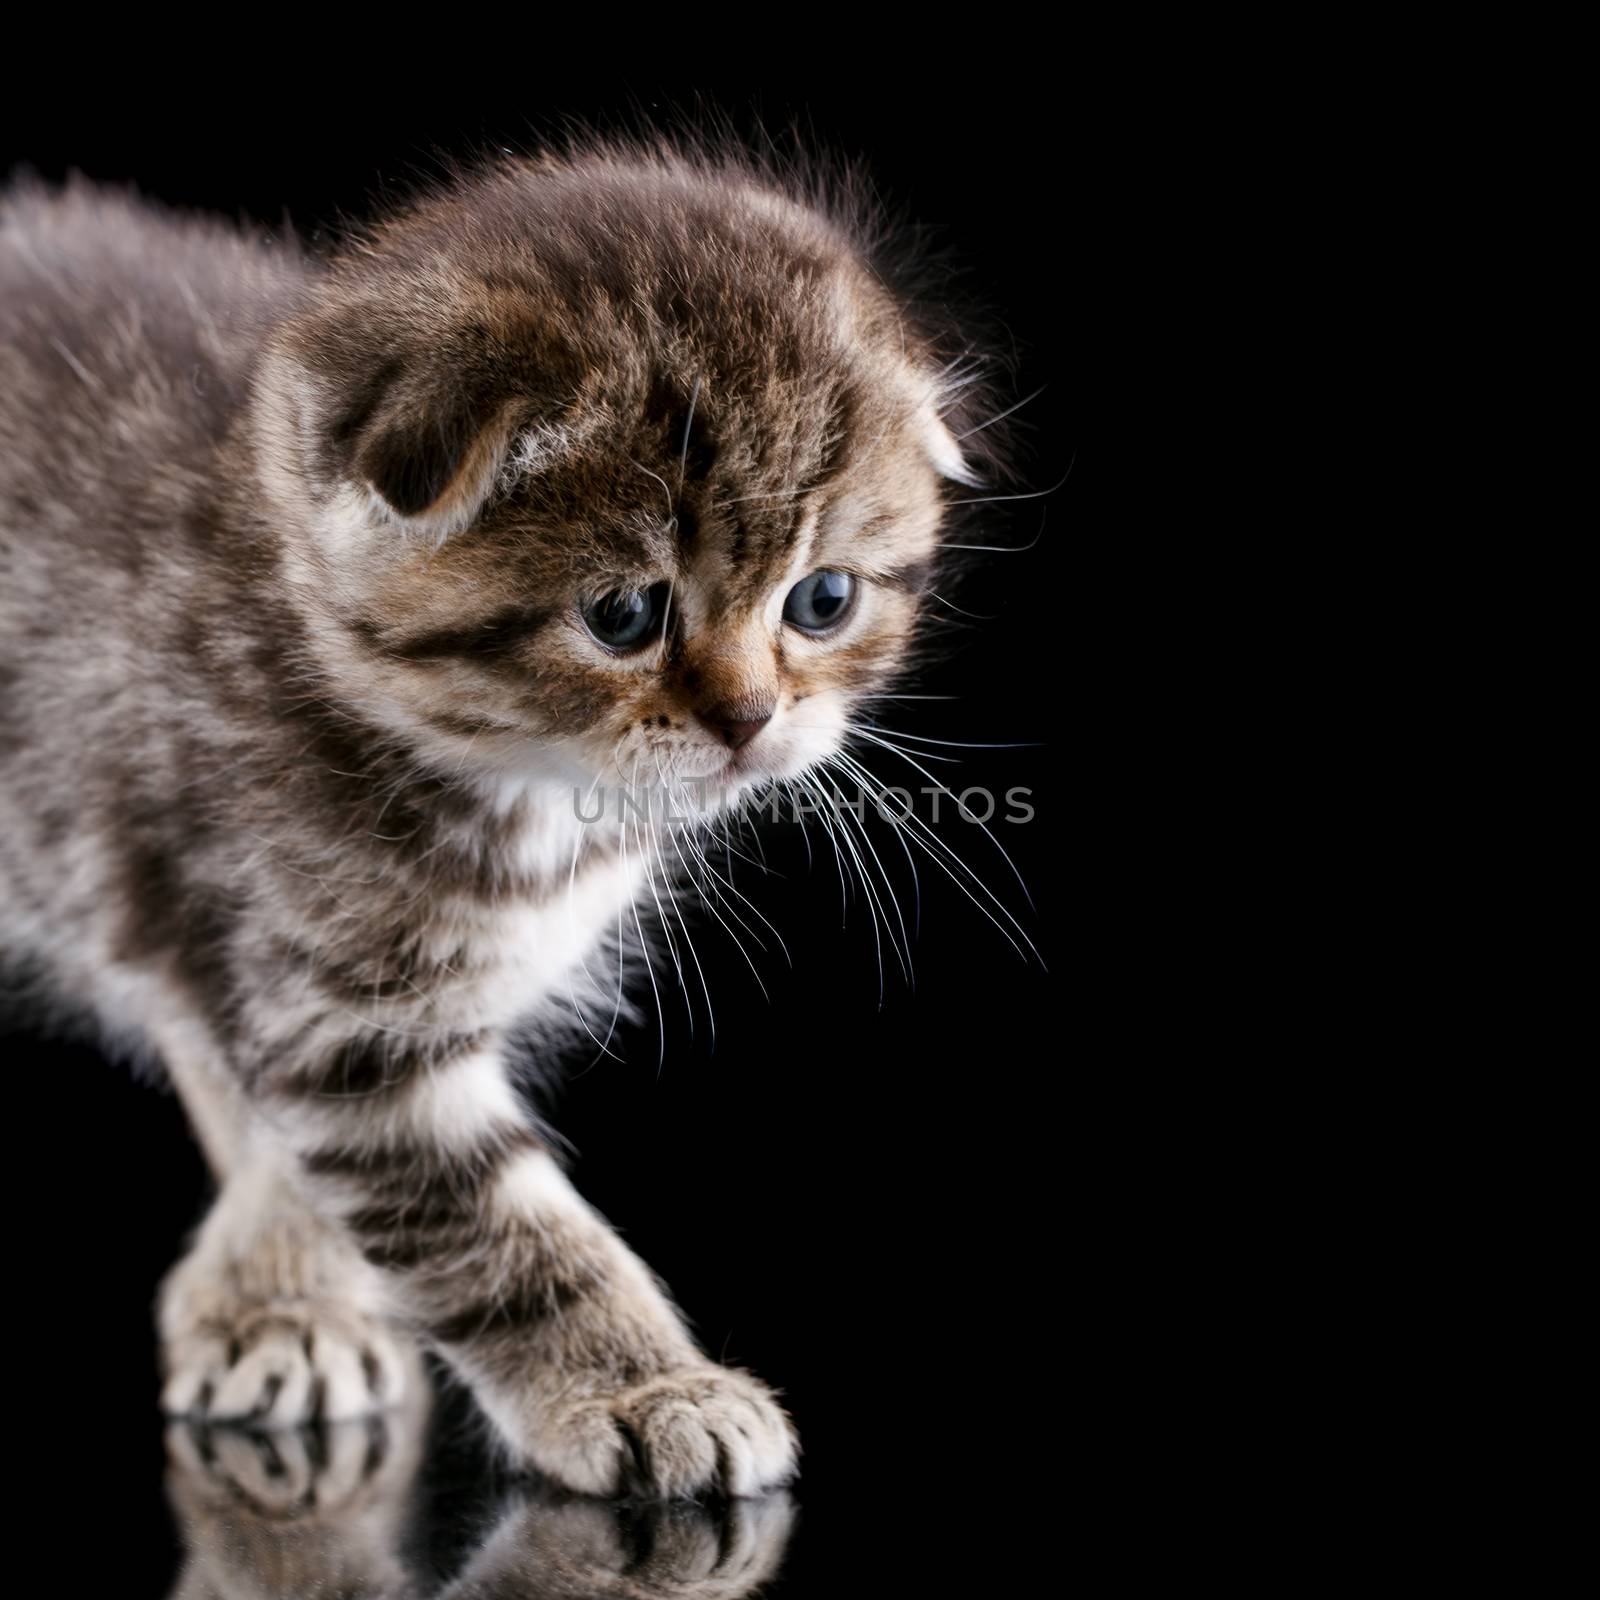 Lop-eared kitten on background. by baronvsp